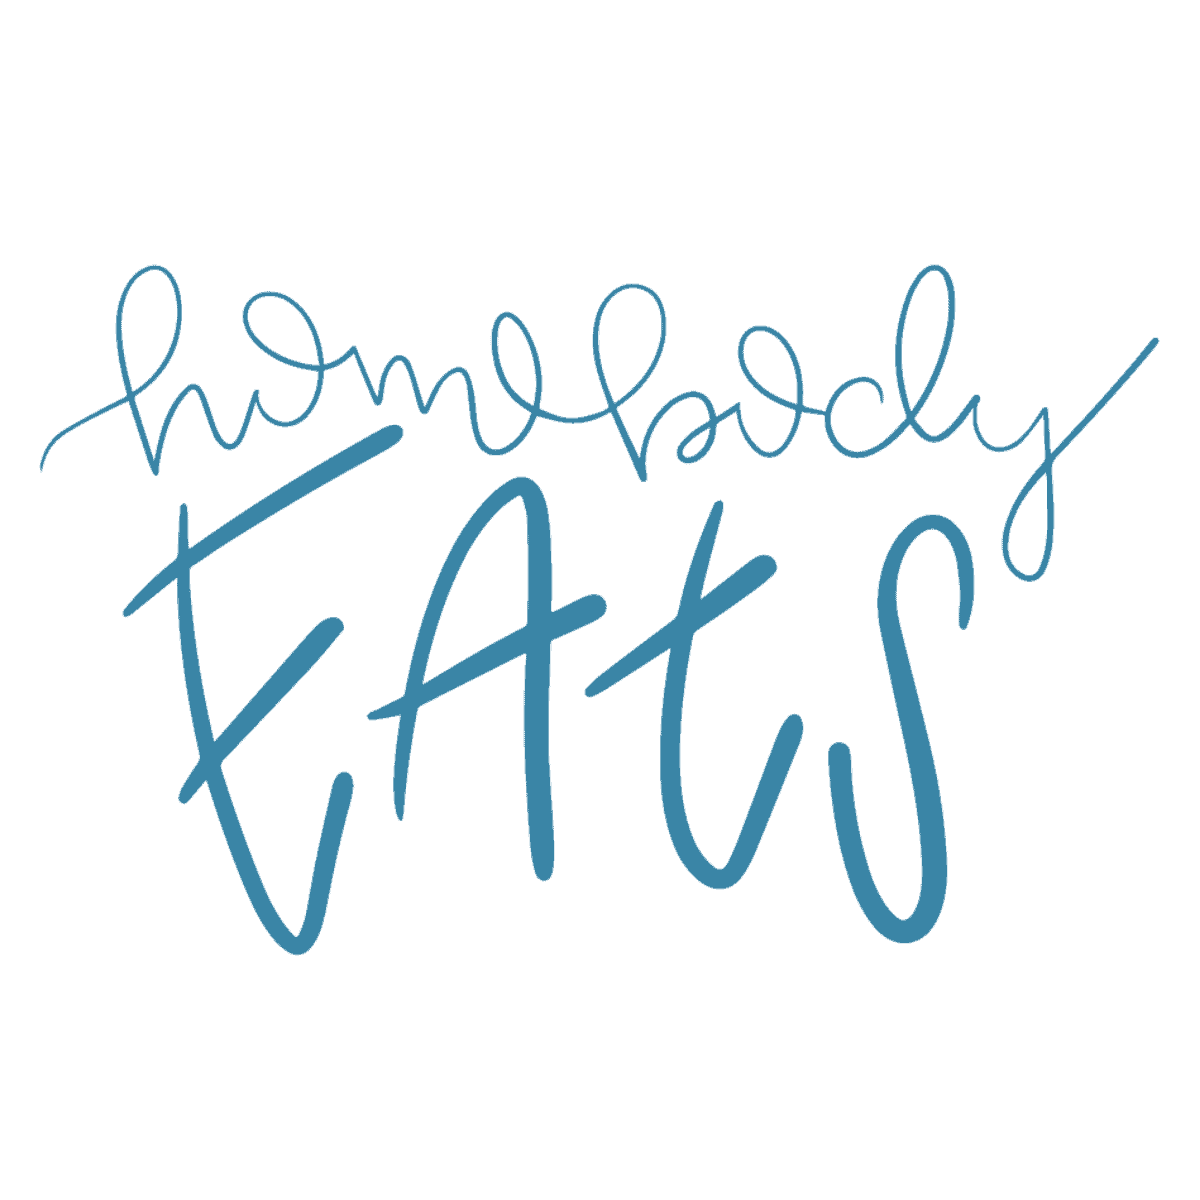 homebody eats blog logo.